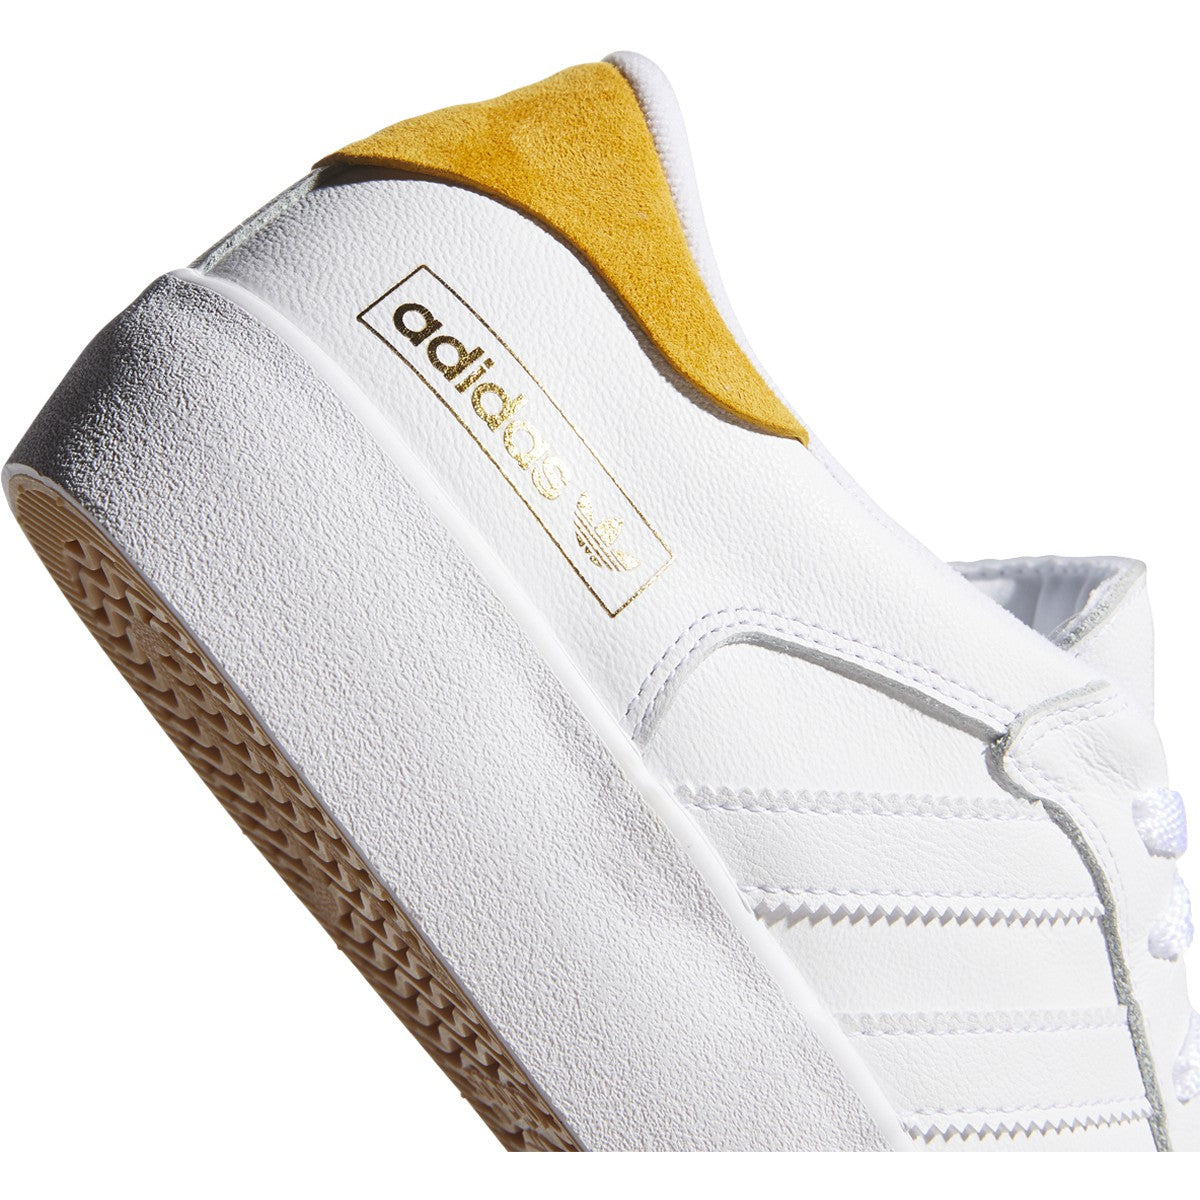 White Leather Matchbreak Super Adidas Skateboarding Shoe